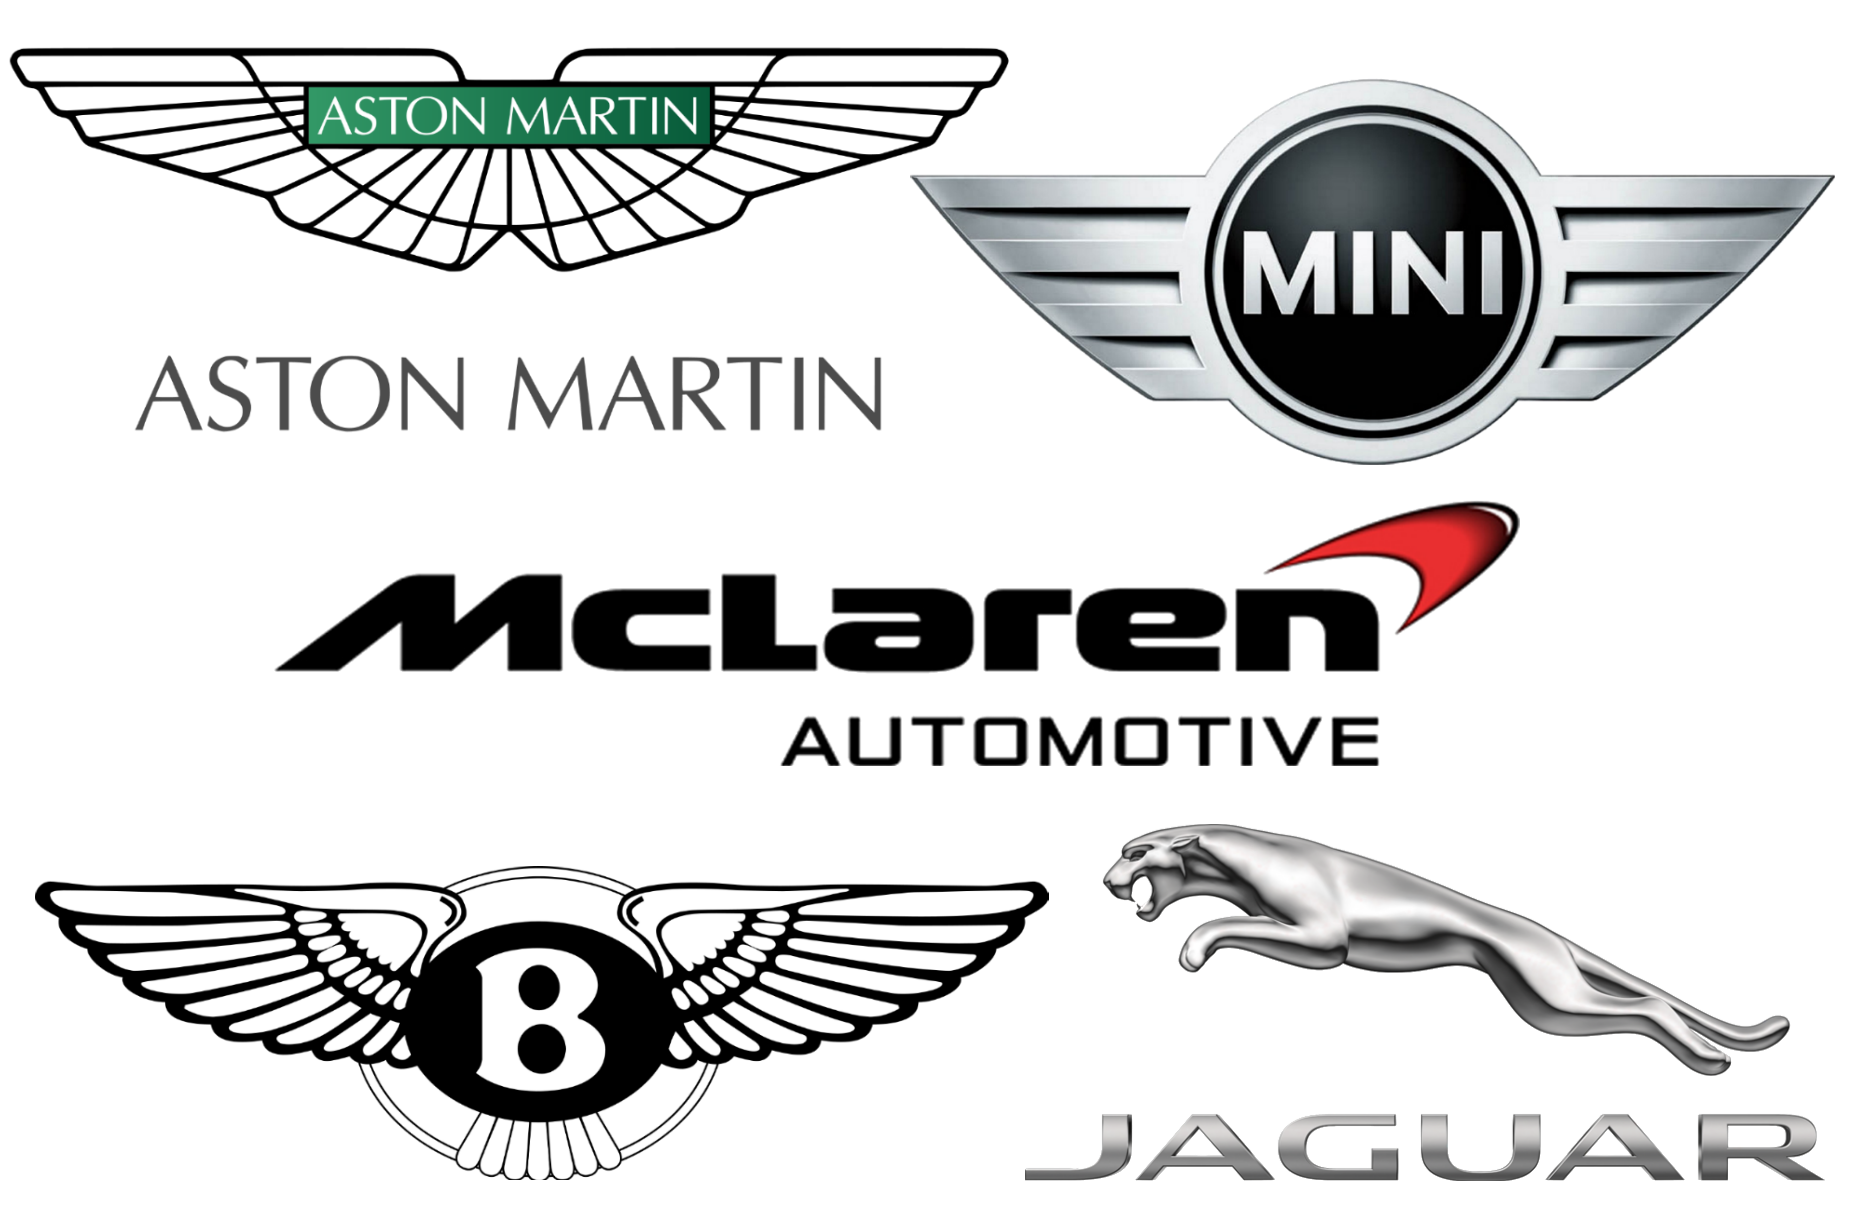 british automotive company logos